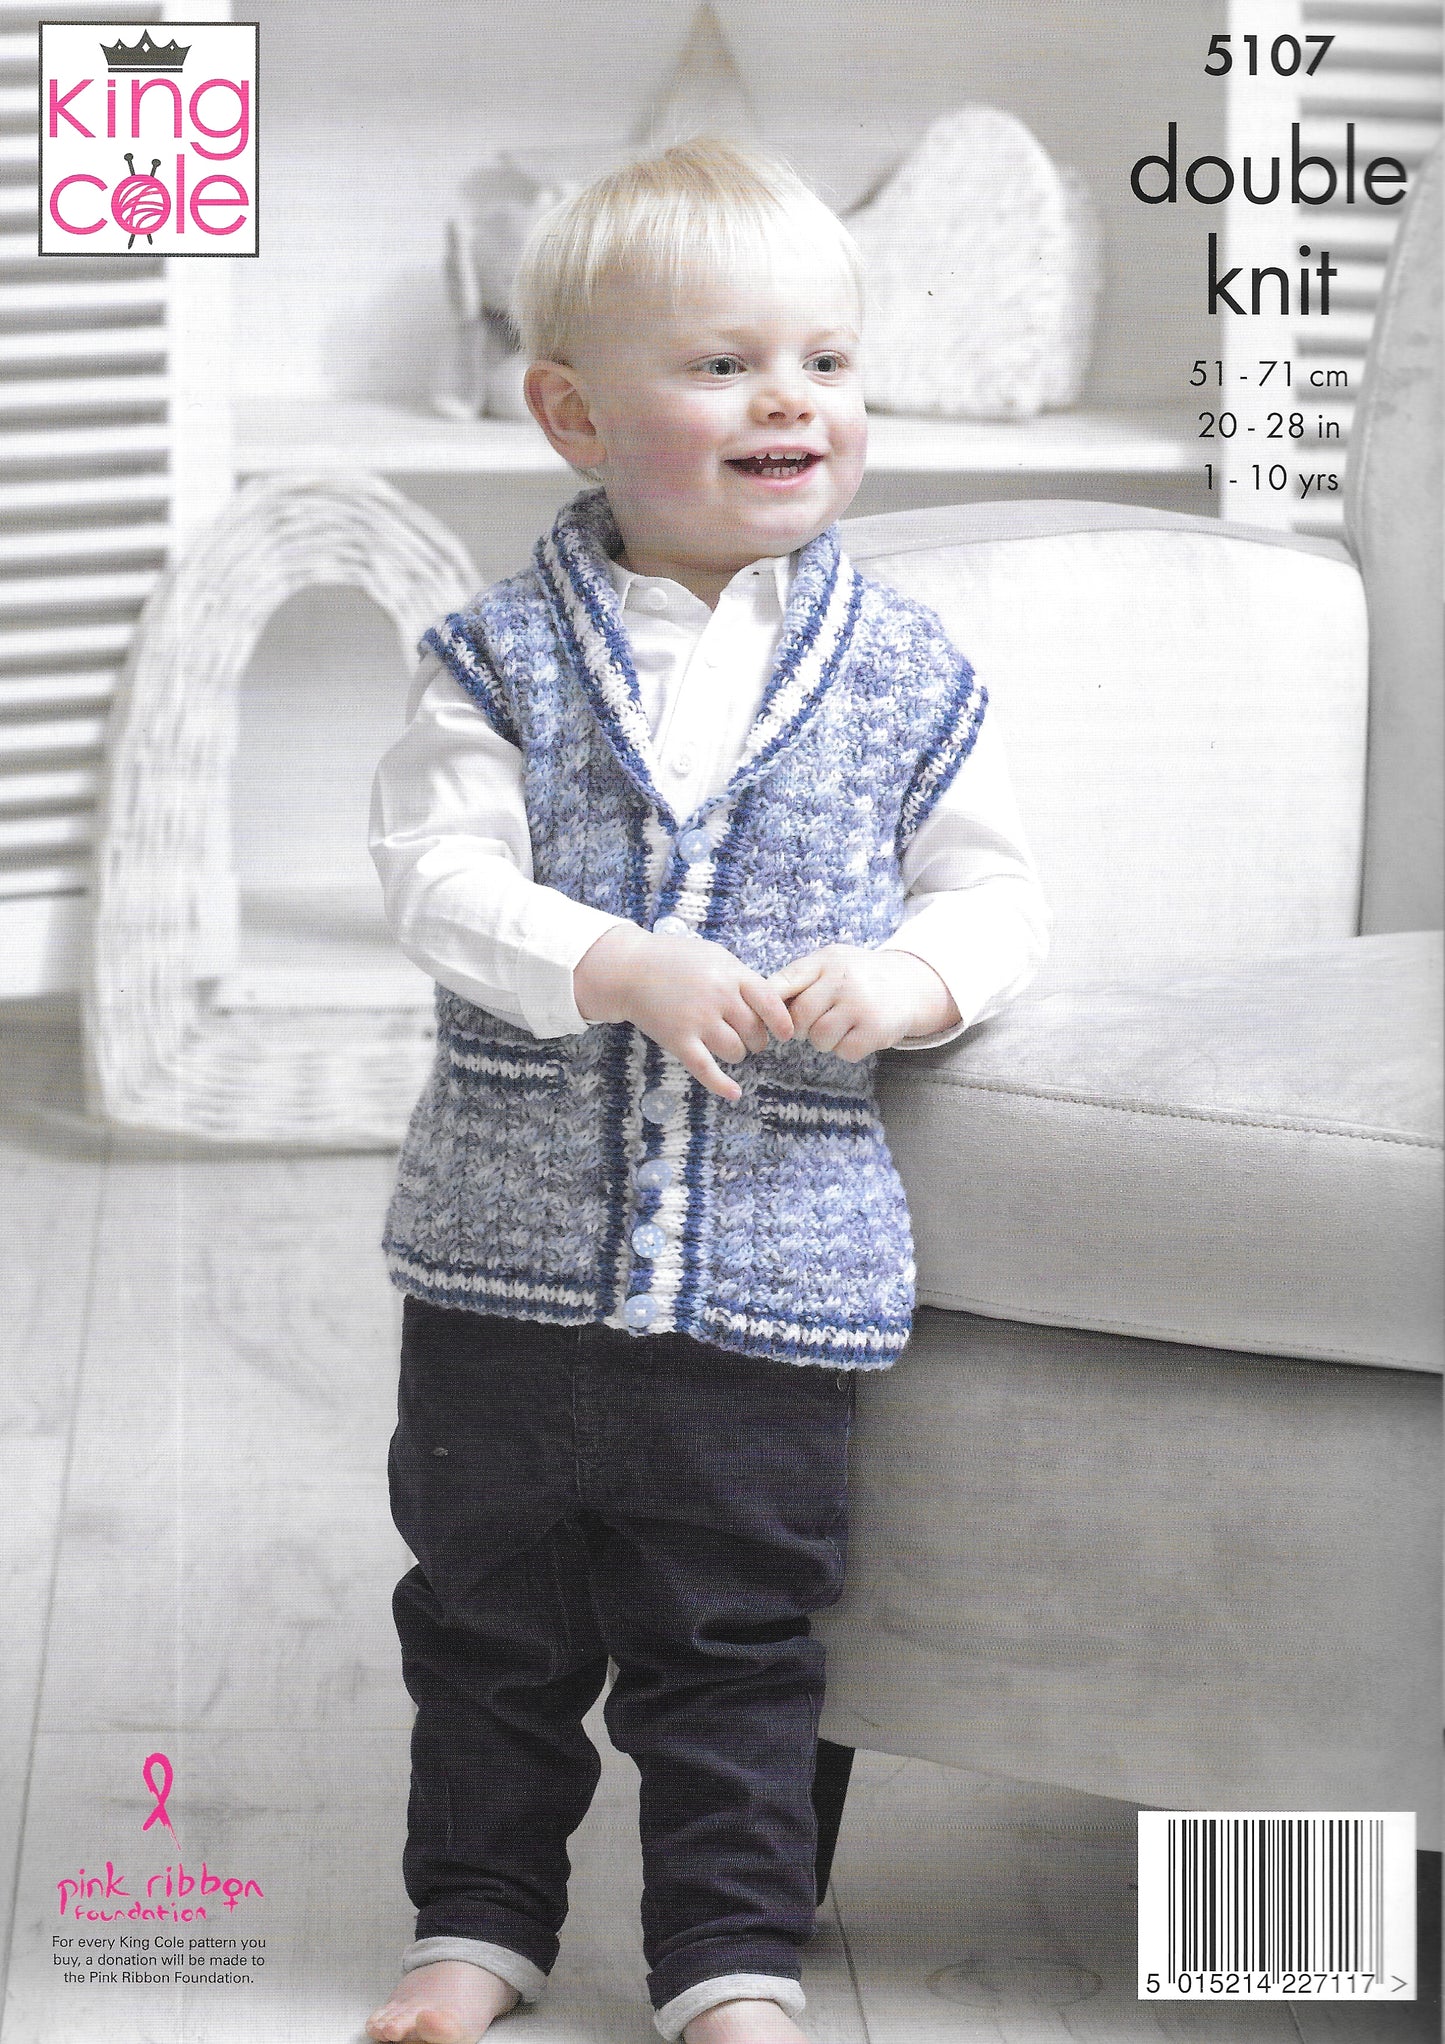 5107 King Cole double knit Baby Sweaters/Waistcoat knitting pattern